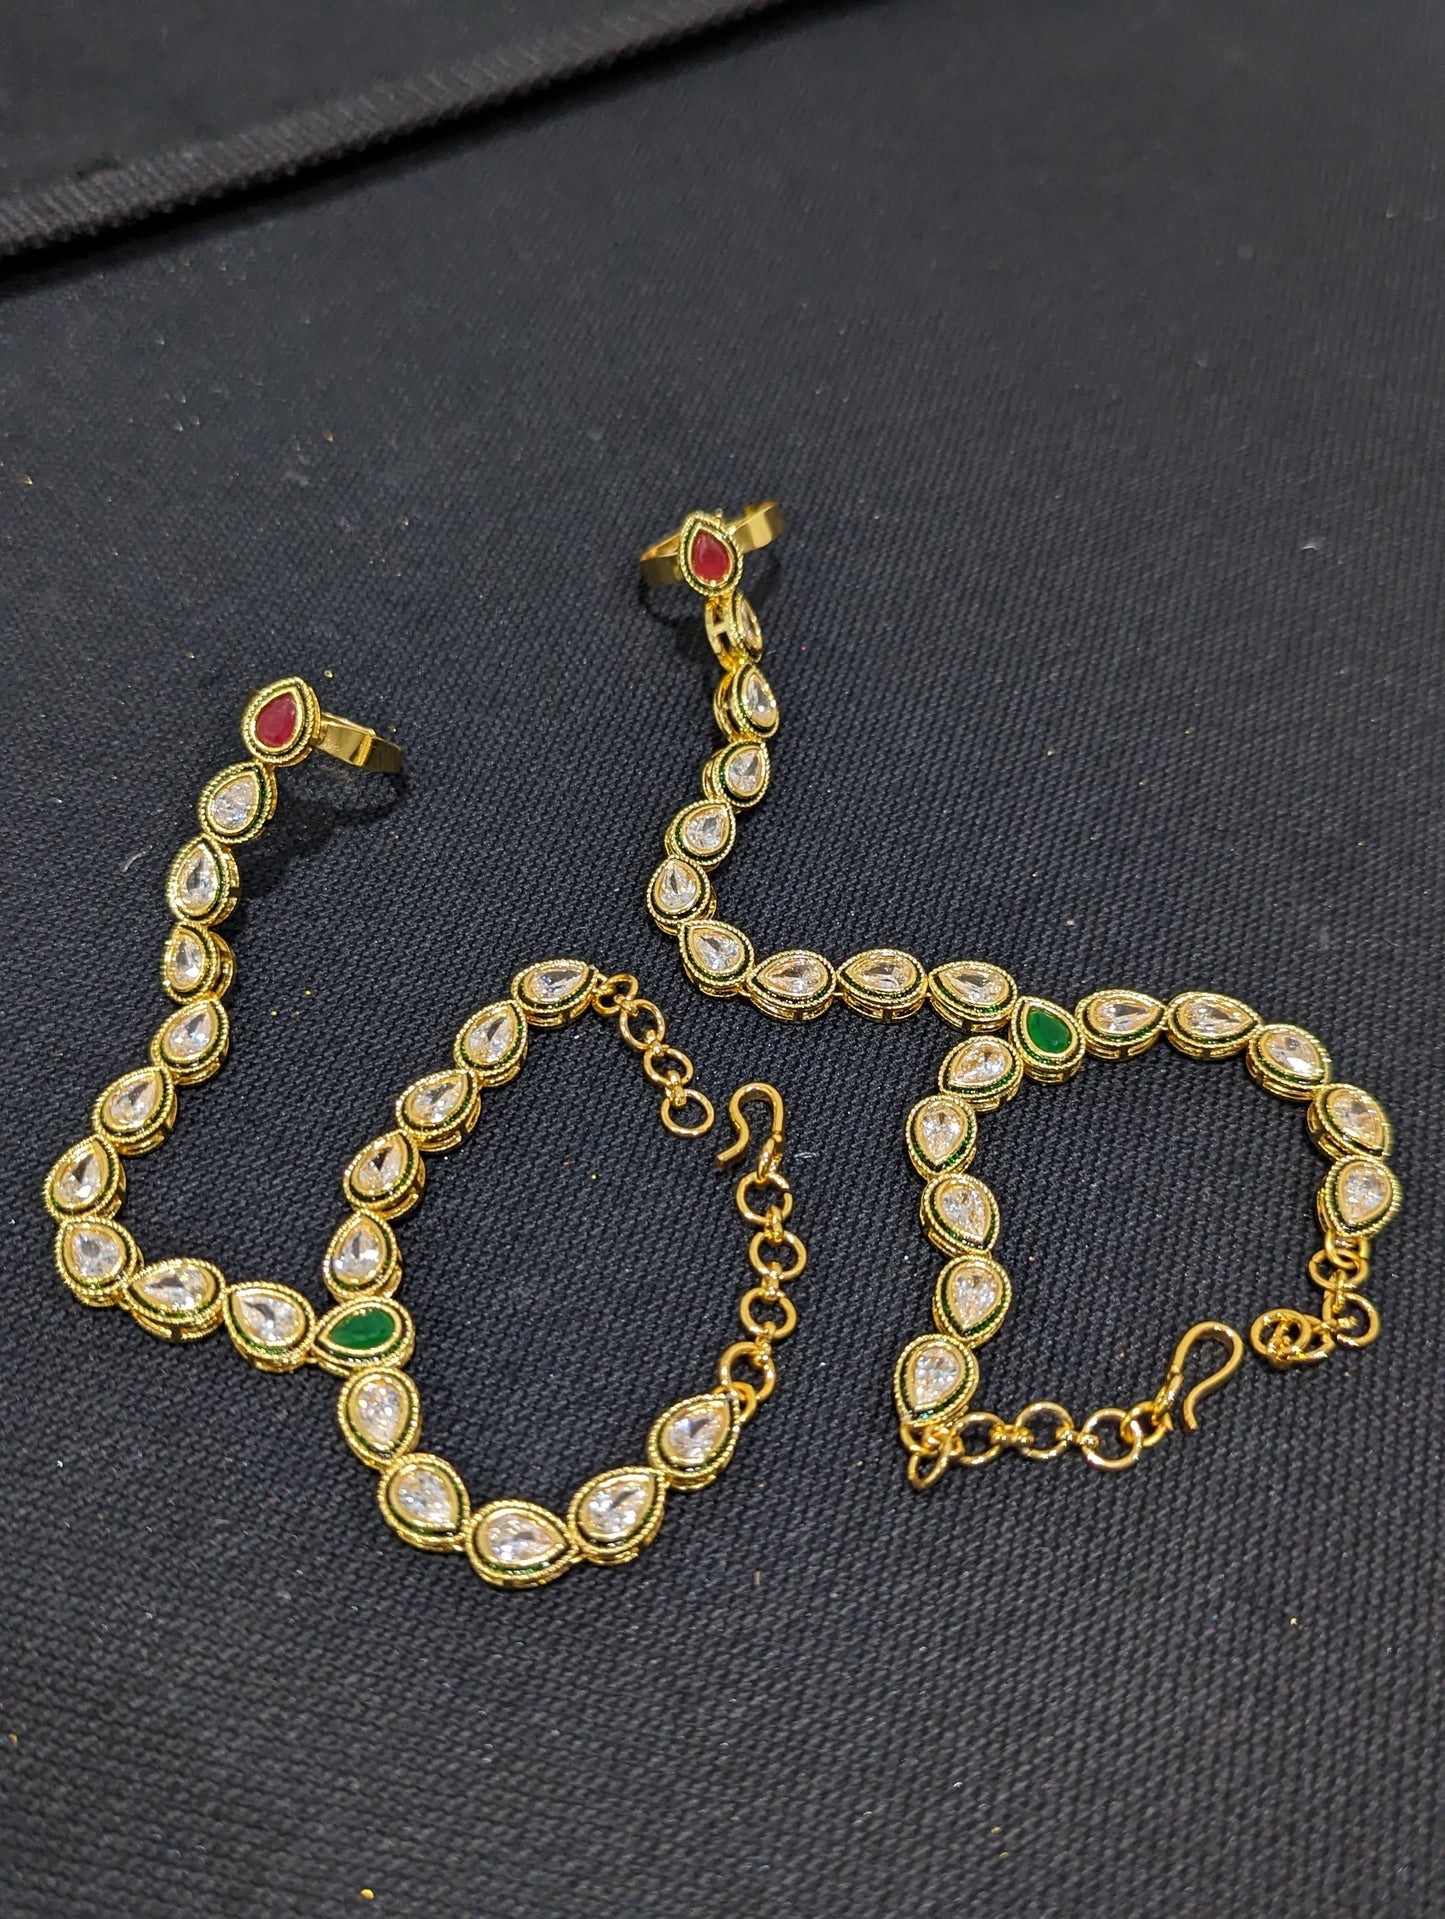 Polki Haath Phool / Bracelet Ring Combo / Ring Chain Bracelet / Indian Wedding Jewelry - D1